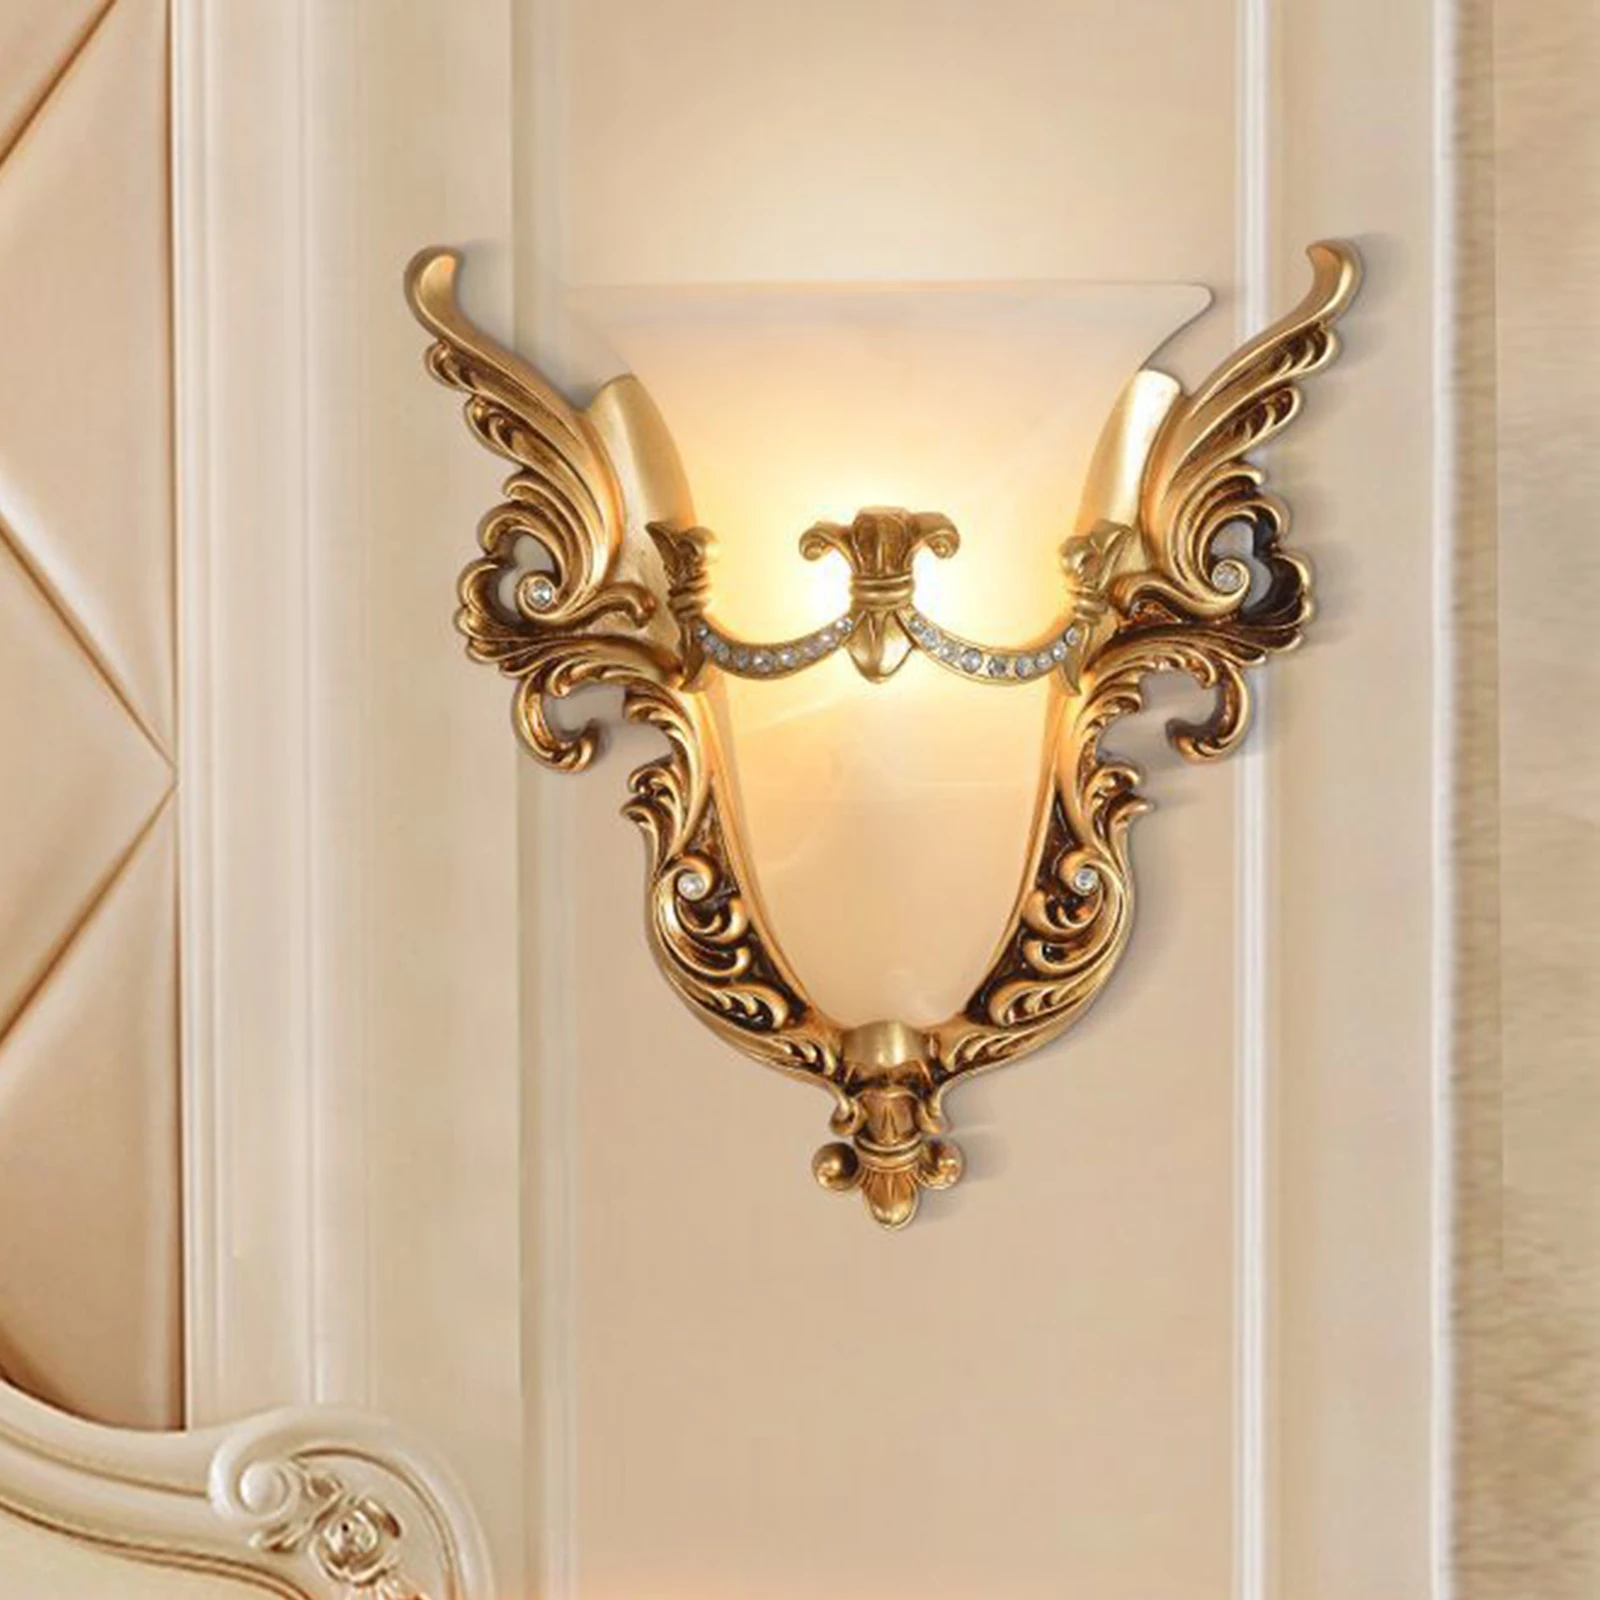 European-style Resin Wall Lamp E14 Bulb Retro Indoor Bedside Wall Sconce Light Fixture Lighting Gold Bedroom Decor